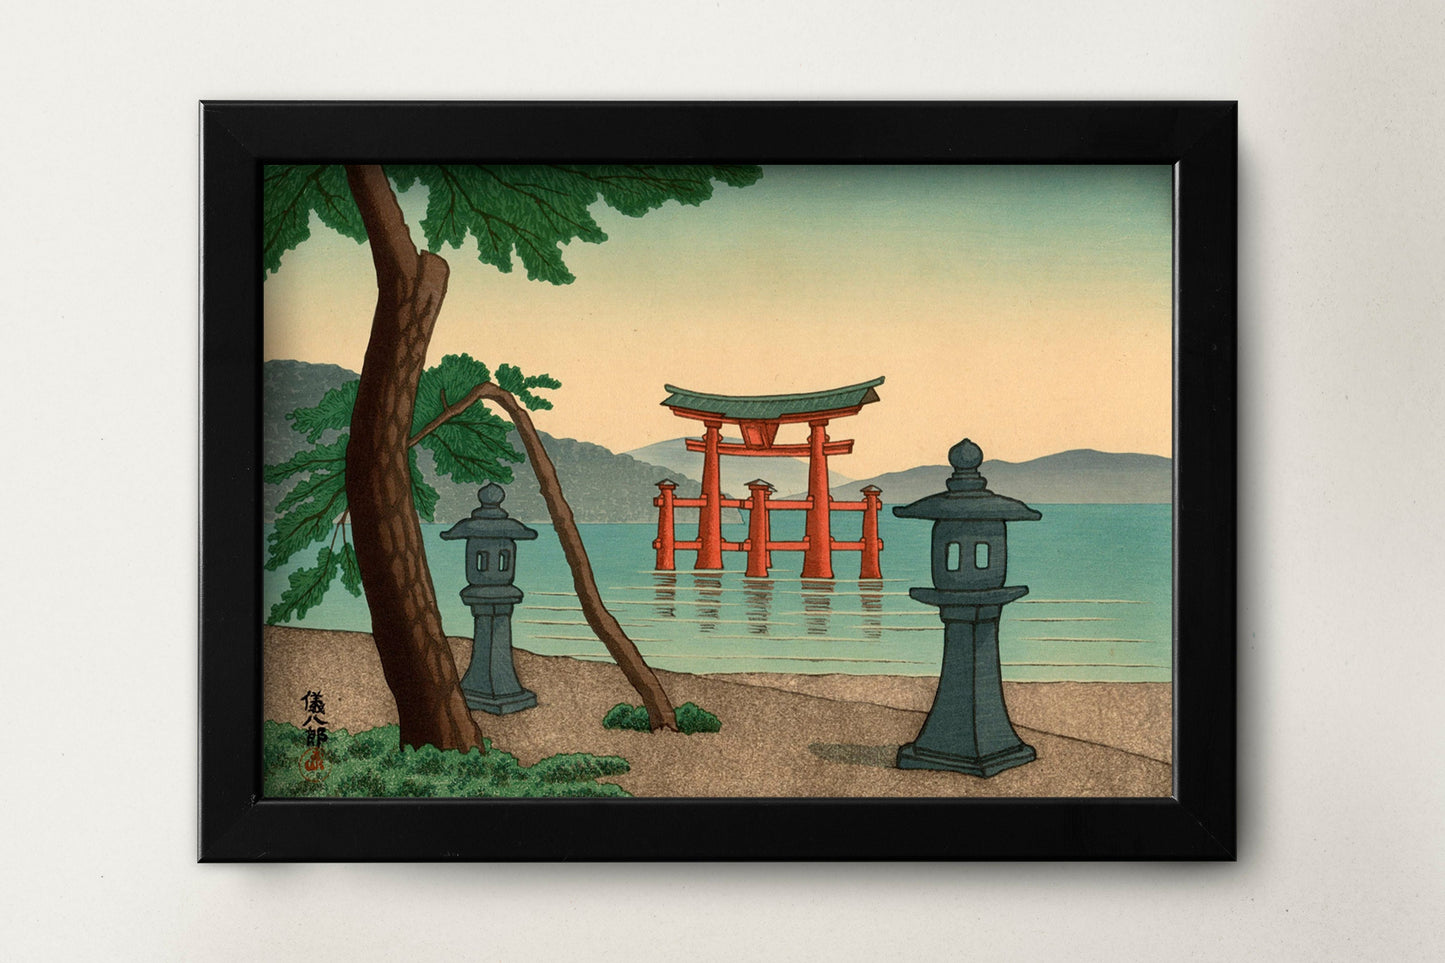 Morning At Miyajima by Okuyama Gihachiro Japanese art Poster Illustration Print Wall Hanging Decor A4 A3 A2